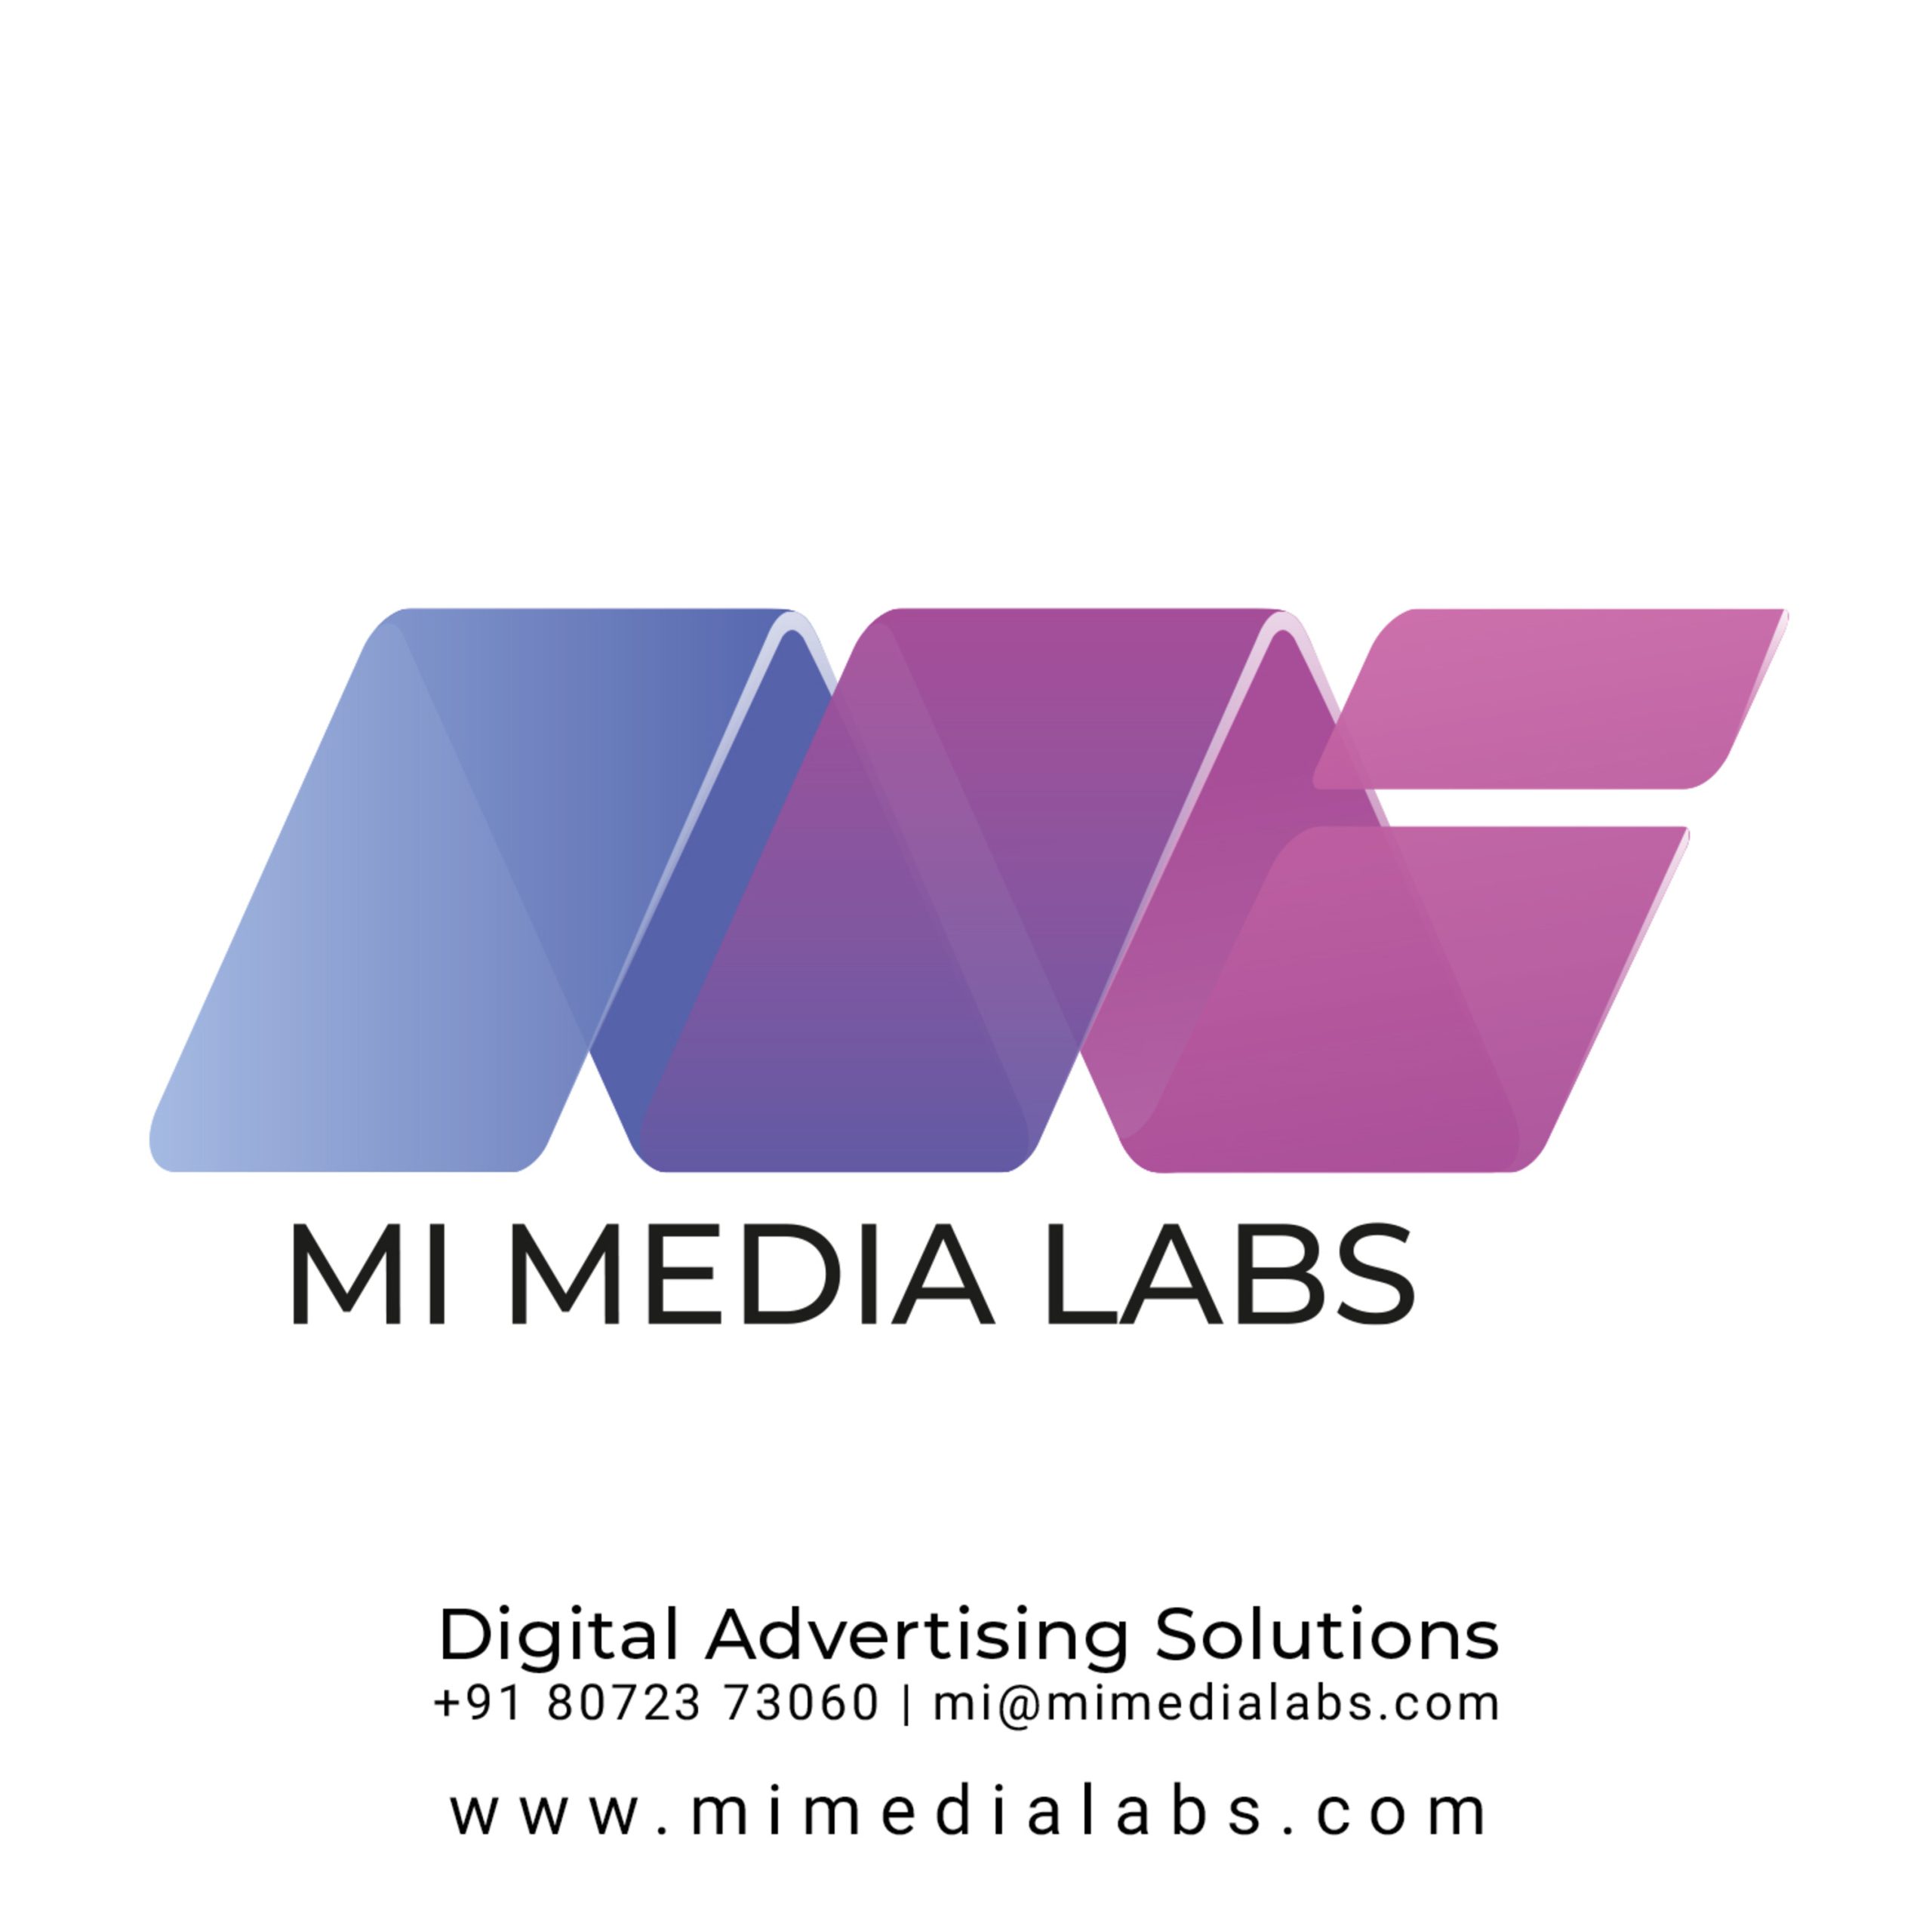 Mimedialabs